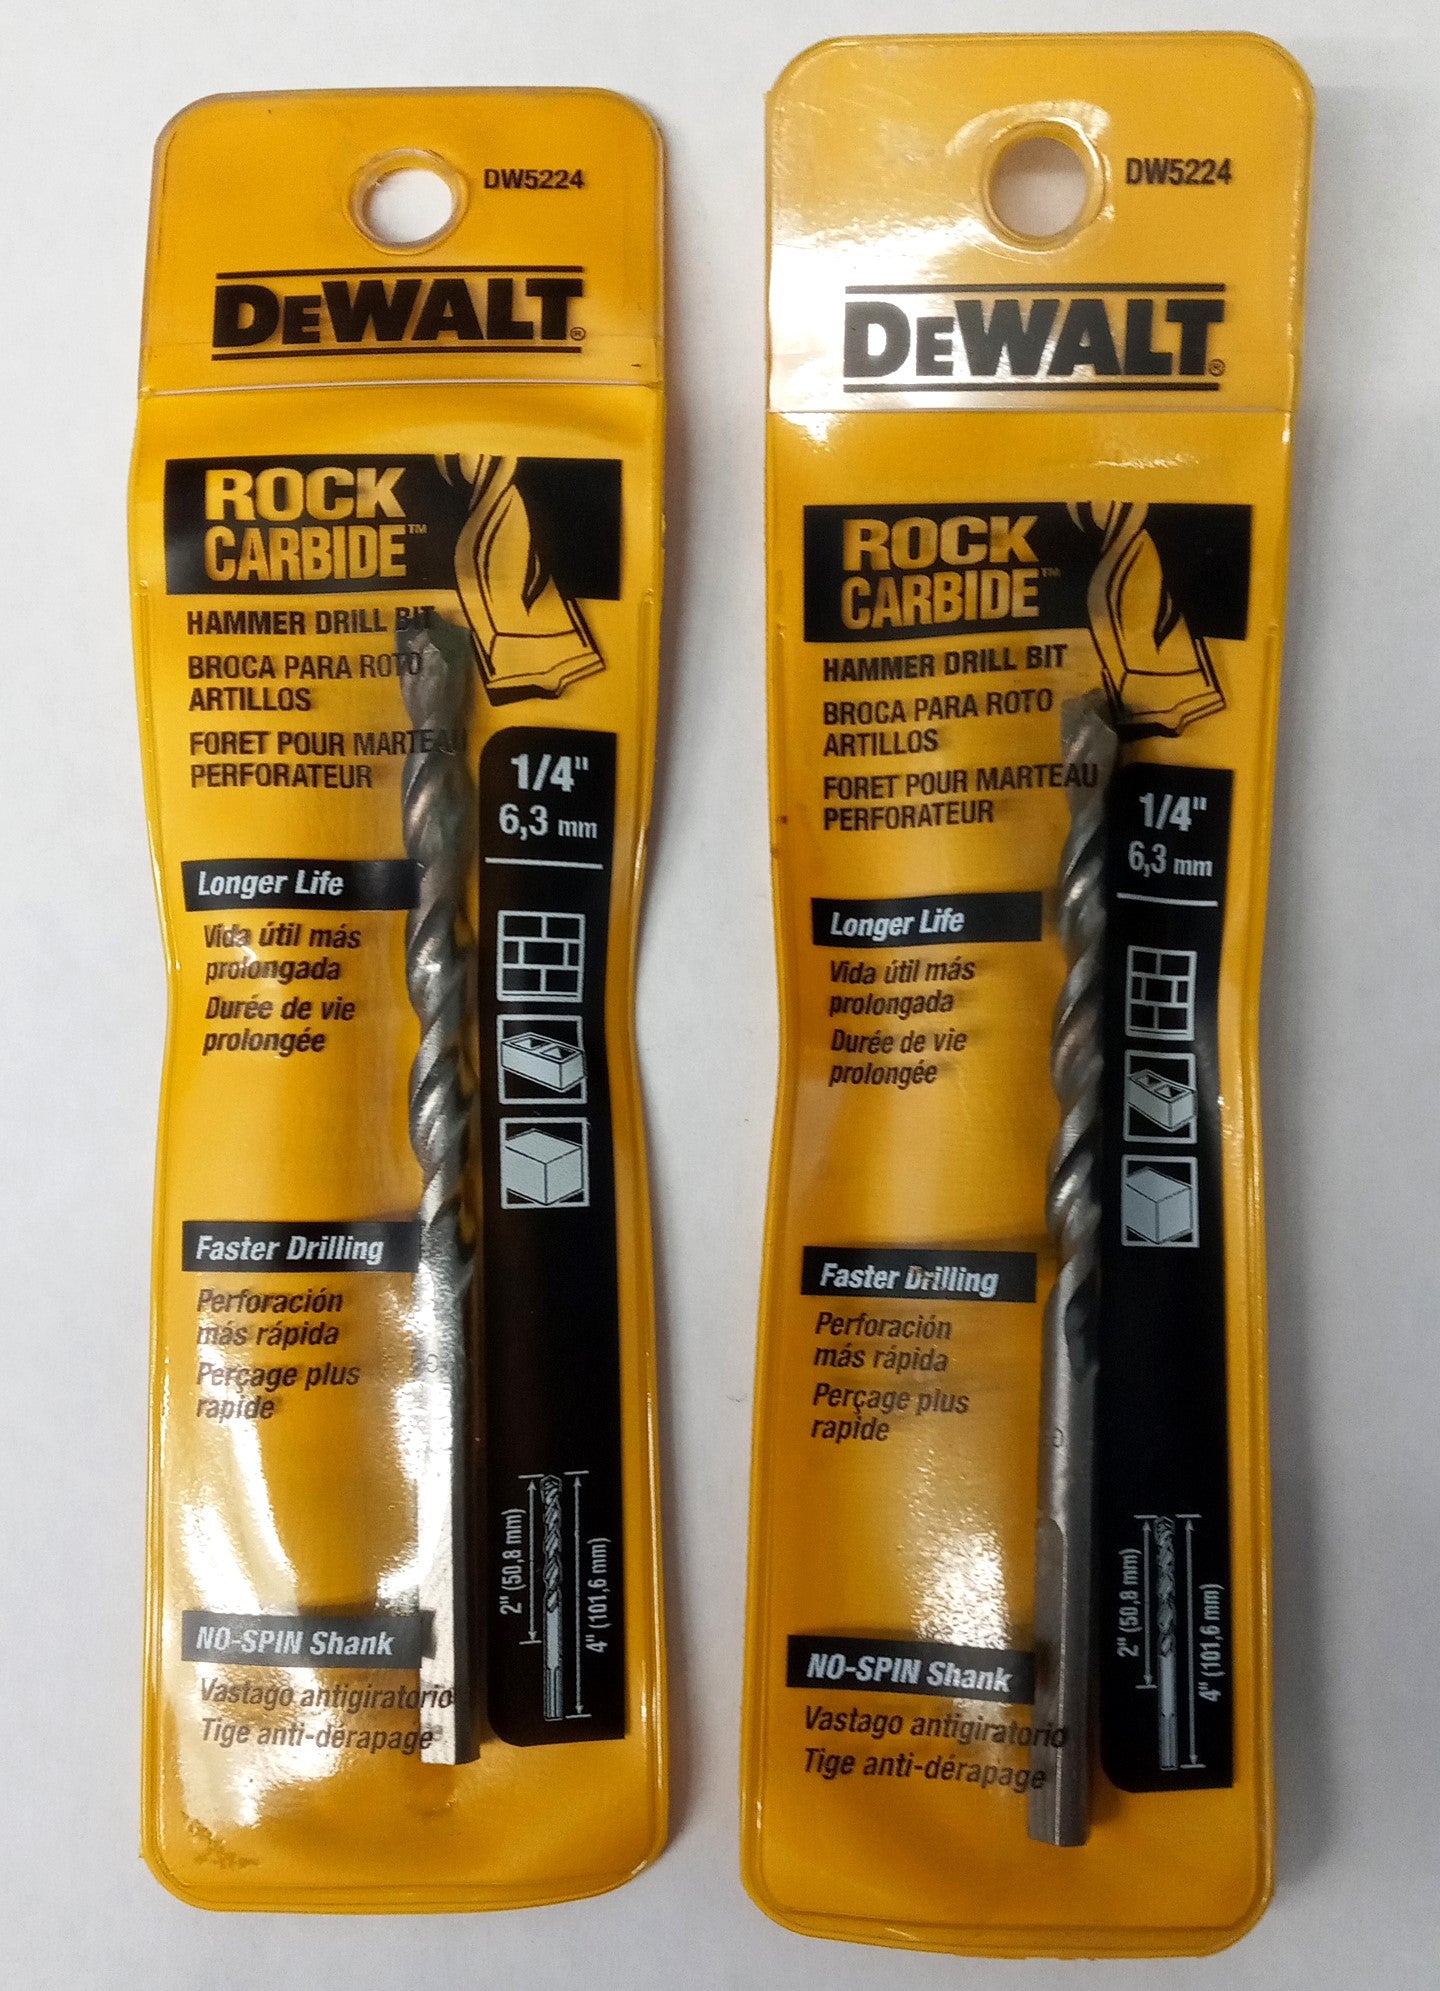 DeWalt DW5224 1/4" Carbide Hammer Drill Bit 2pcs